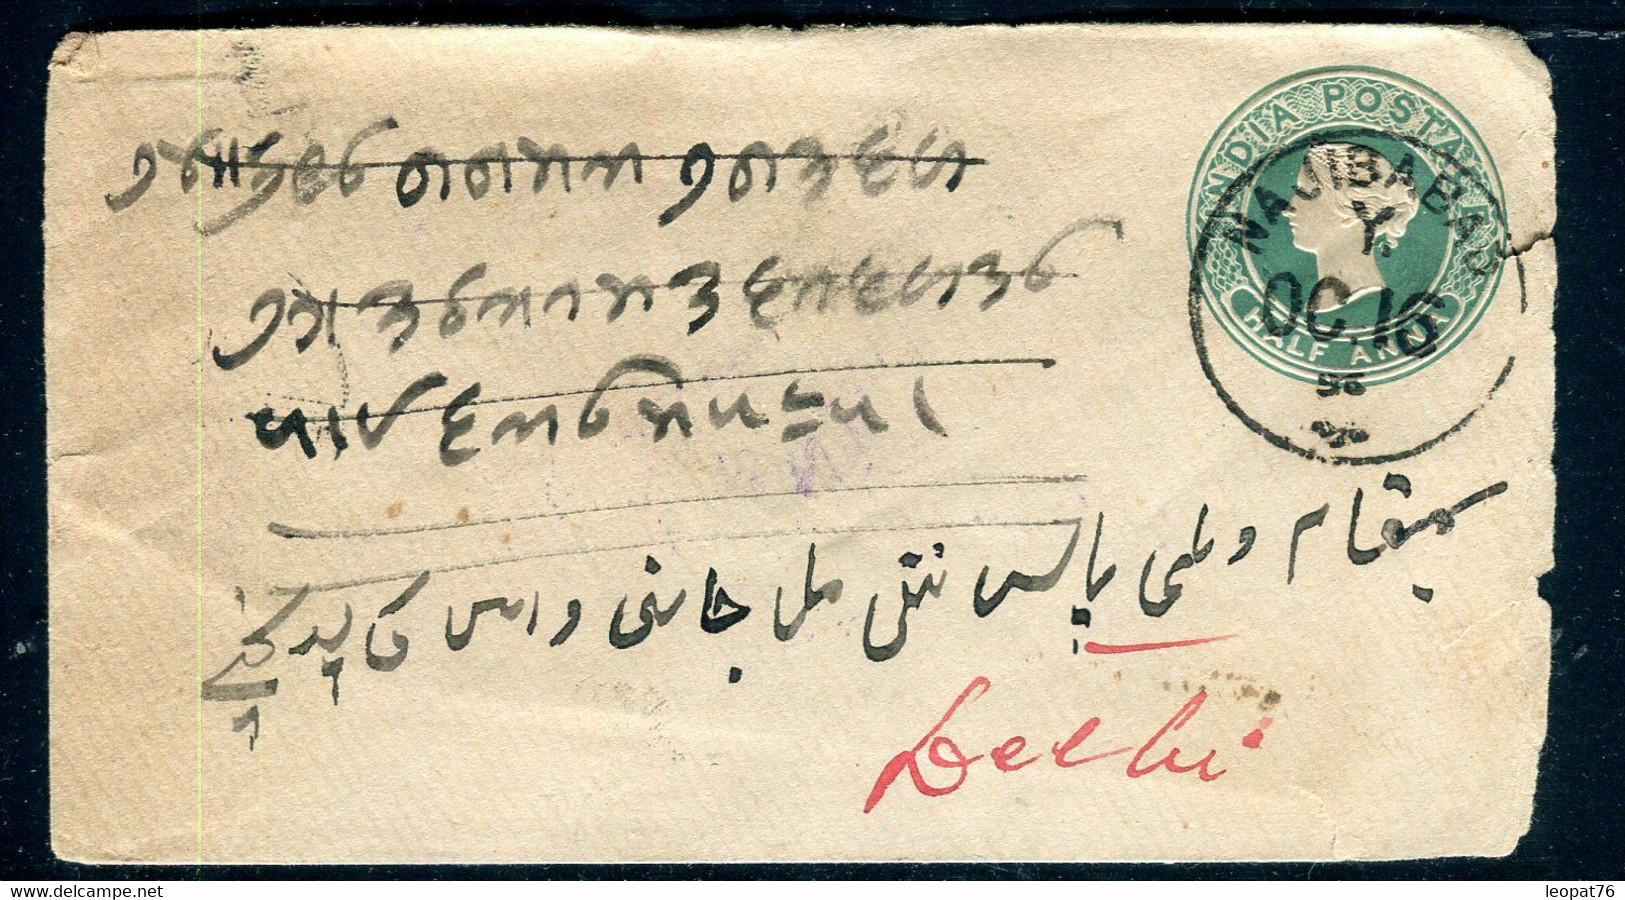 Indes Anglaises - Entier Postal Type Victoria De Majibabad Pour Delhi En 1896 - A 38 - 1882-1901 Keizerrijk